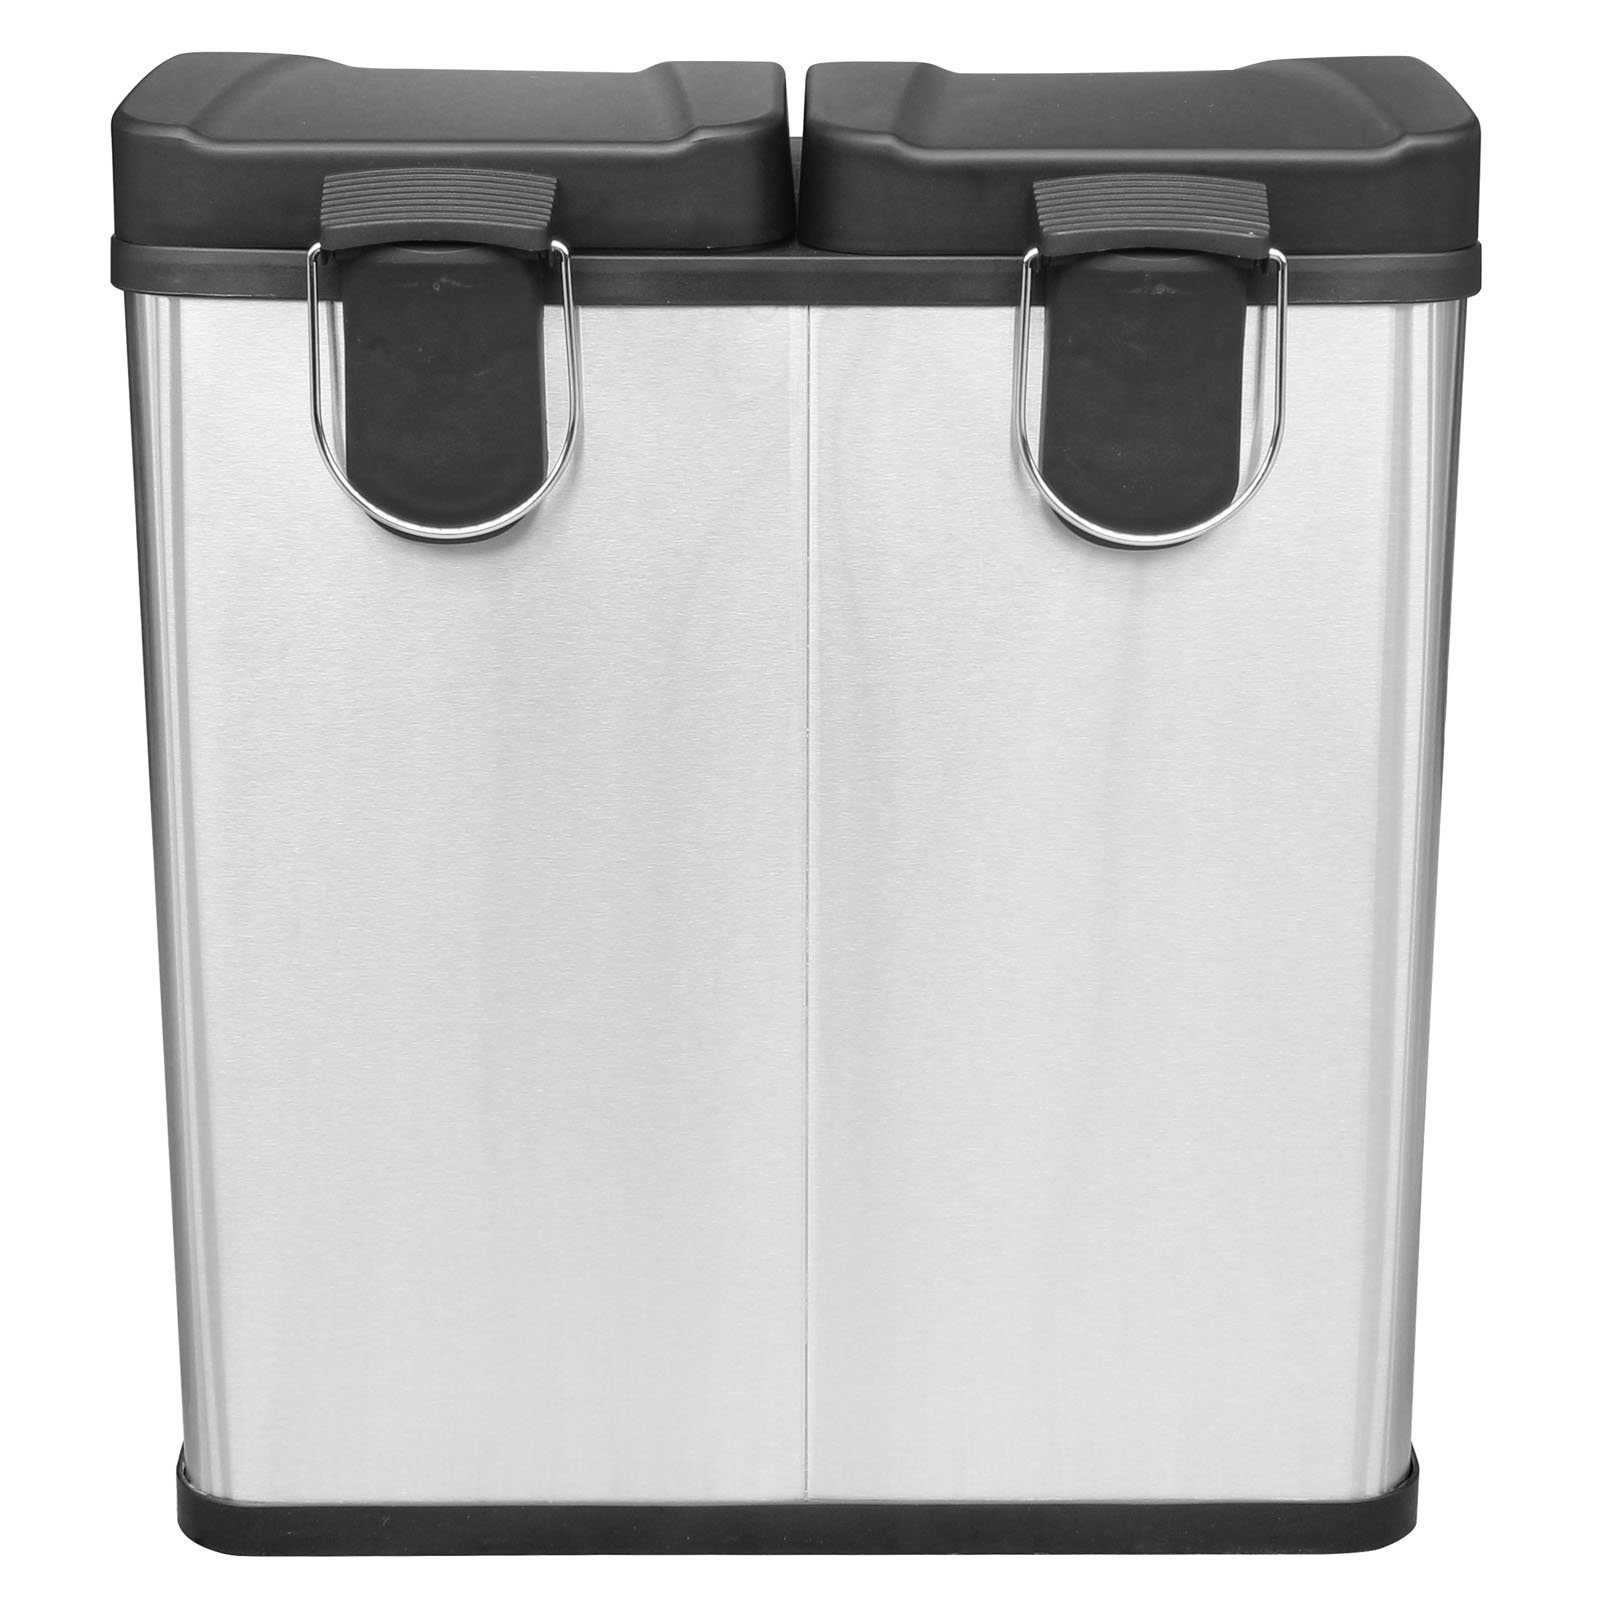 Mülleimer Silber 20 Liter Mülltrenner HAC24 2x Matt je Liter: Treteimer Küche Duo 40 Edelstahl Gebürsteten Abfalleimer Abfallbehälter, Doppel